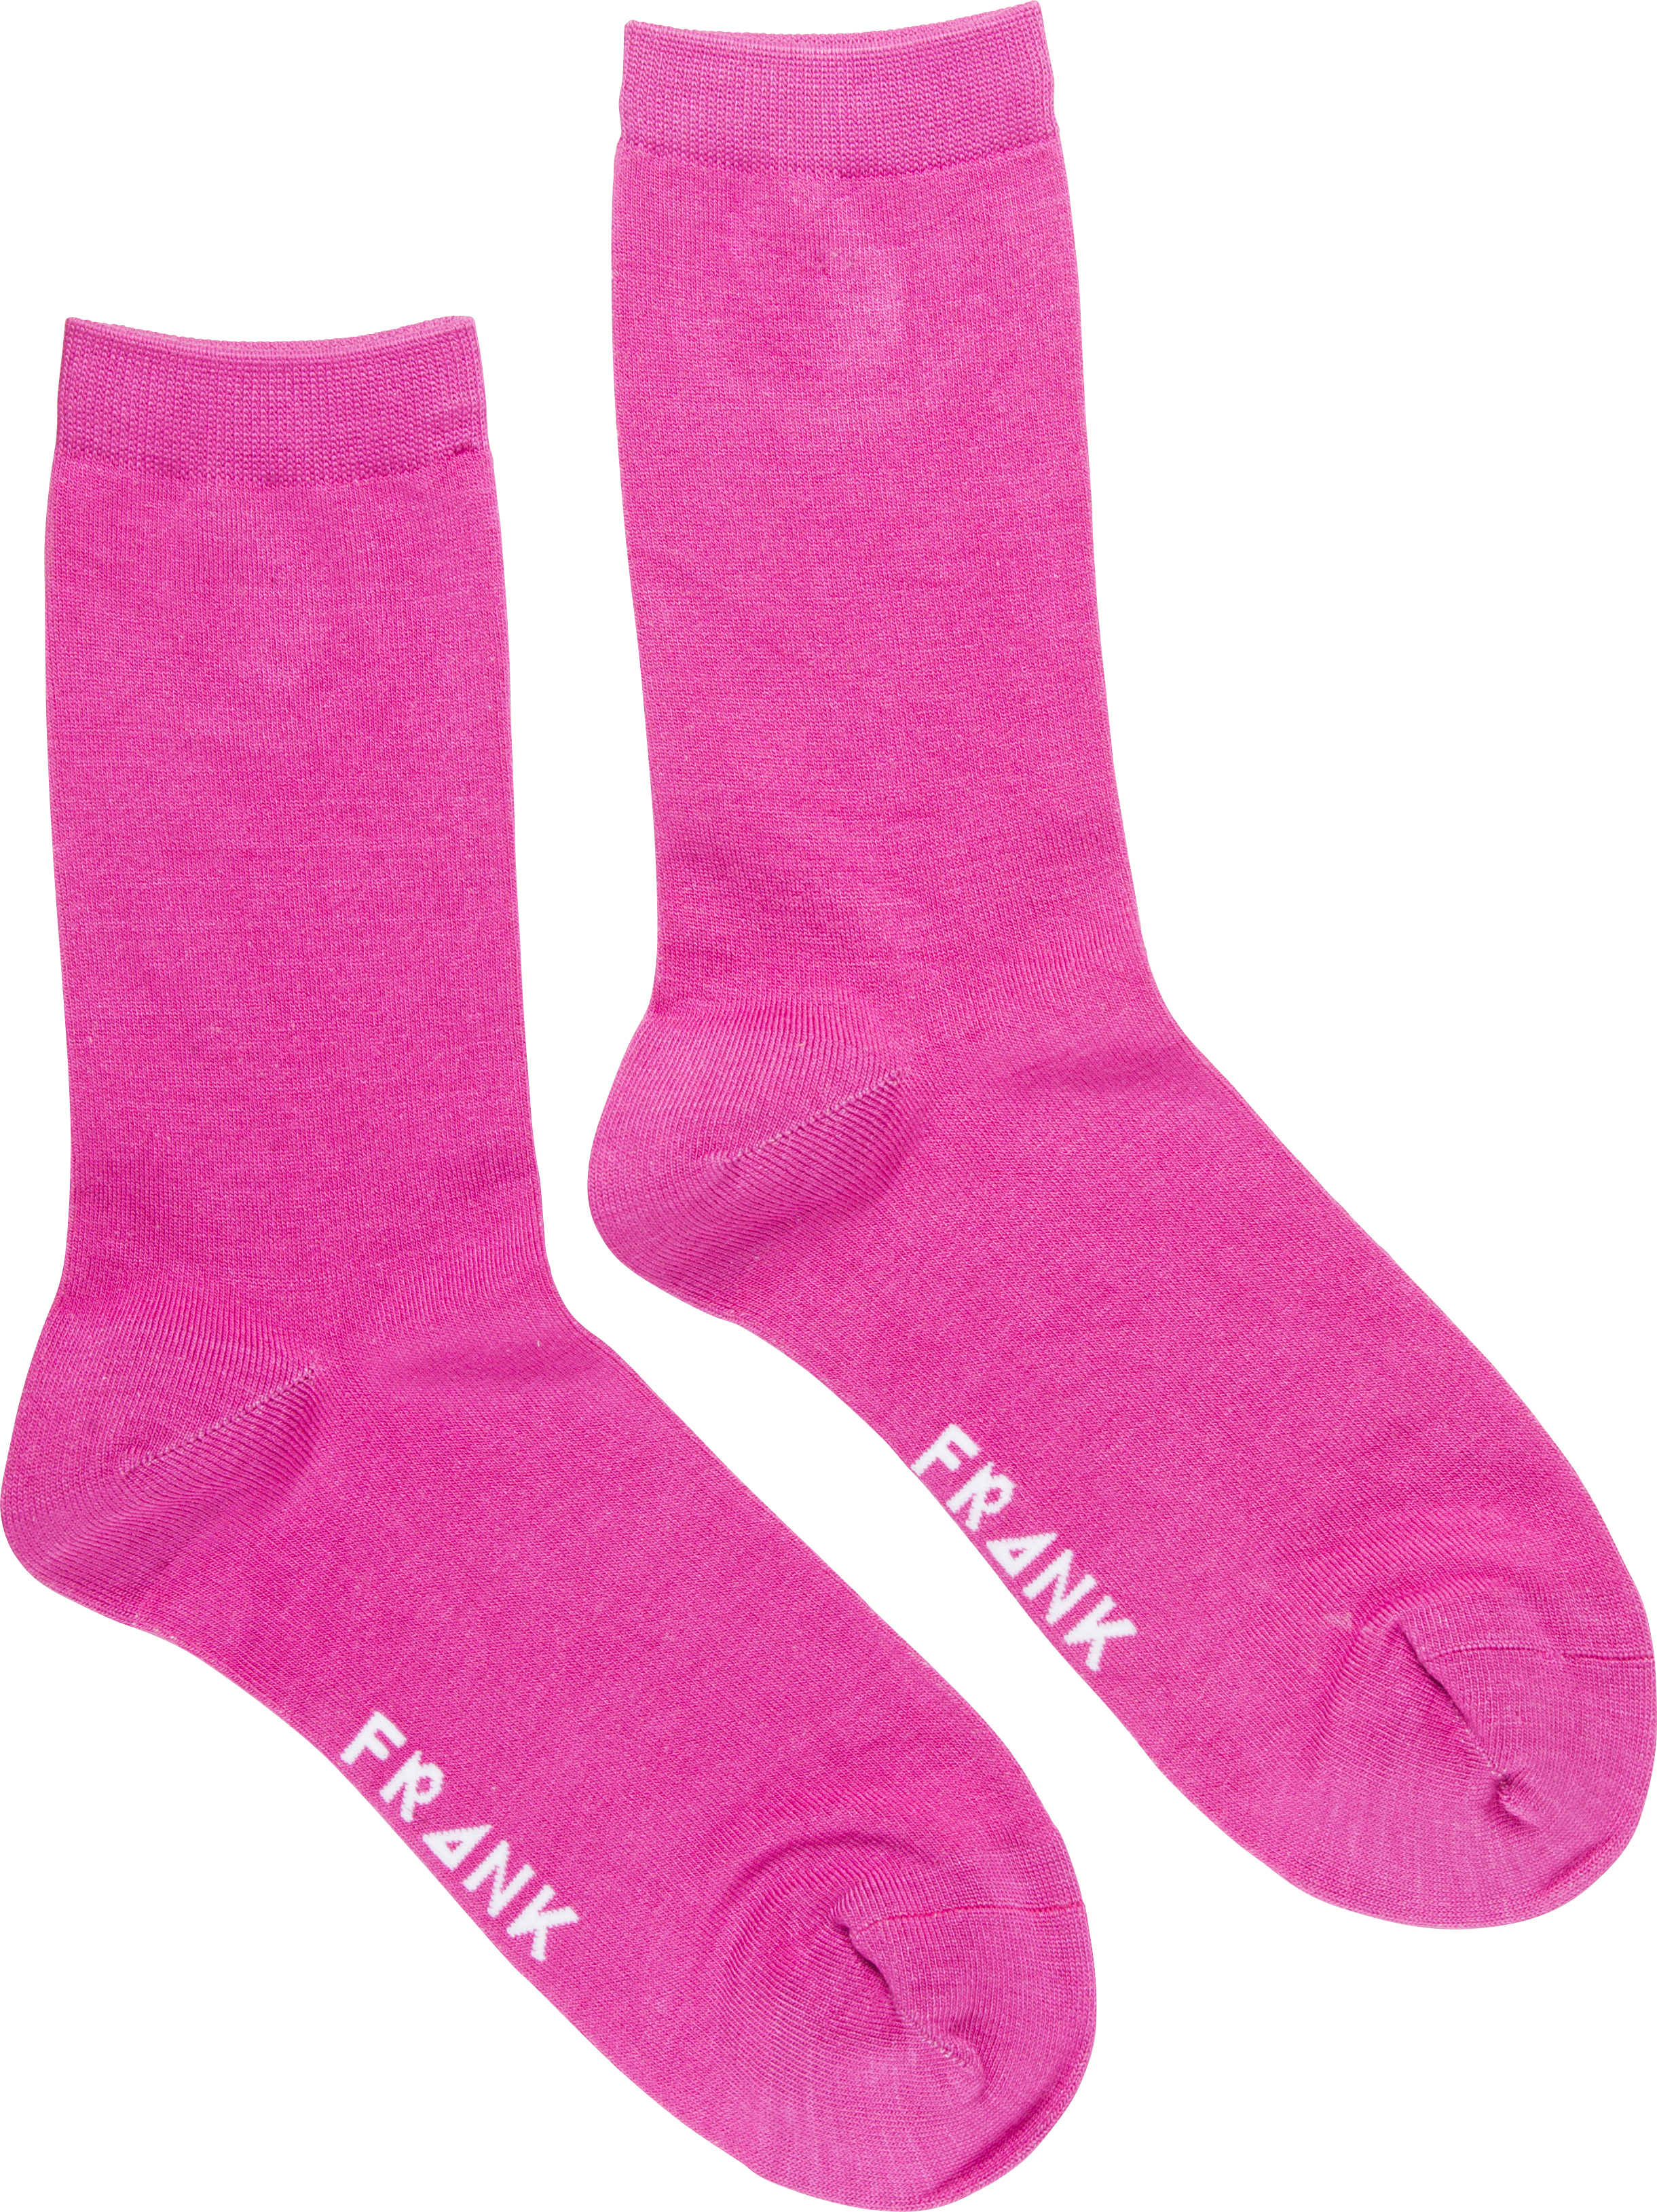 Frank Dandy Bamboo Socks Solid Rose Pink 36-40